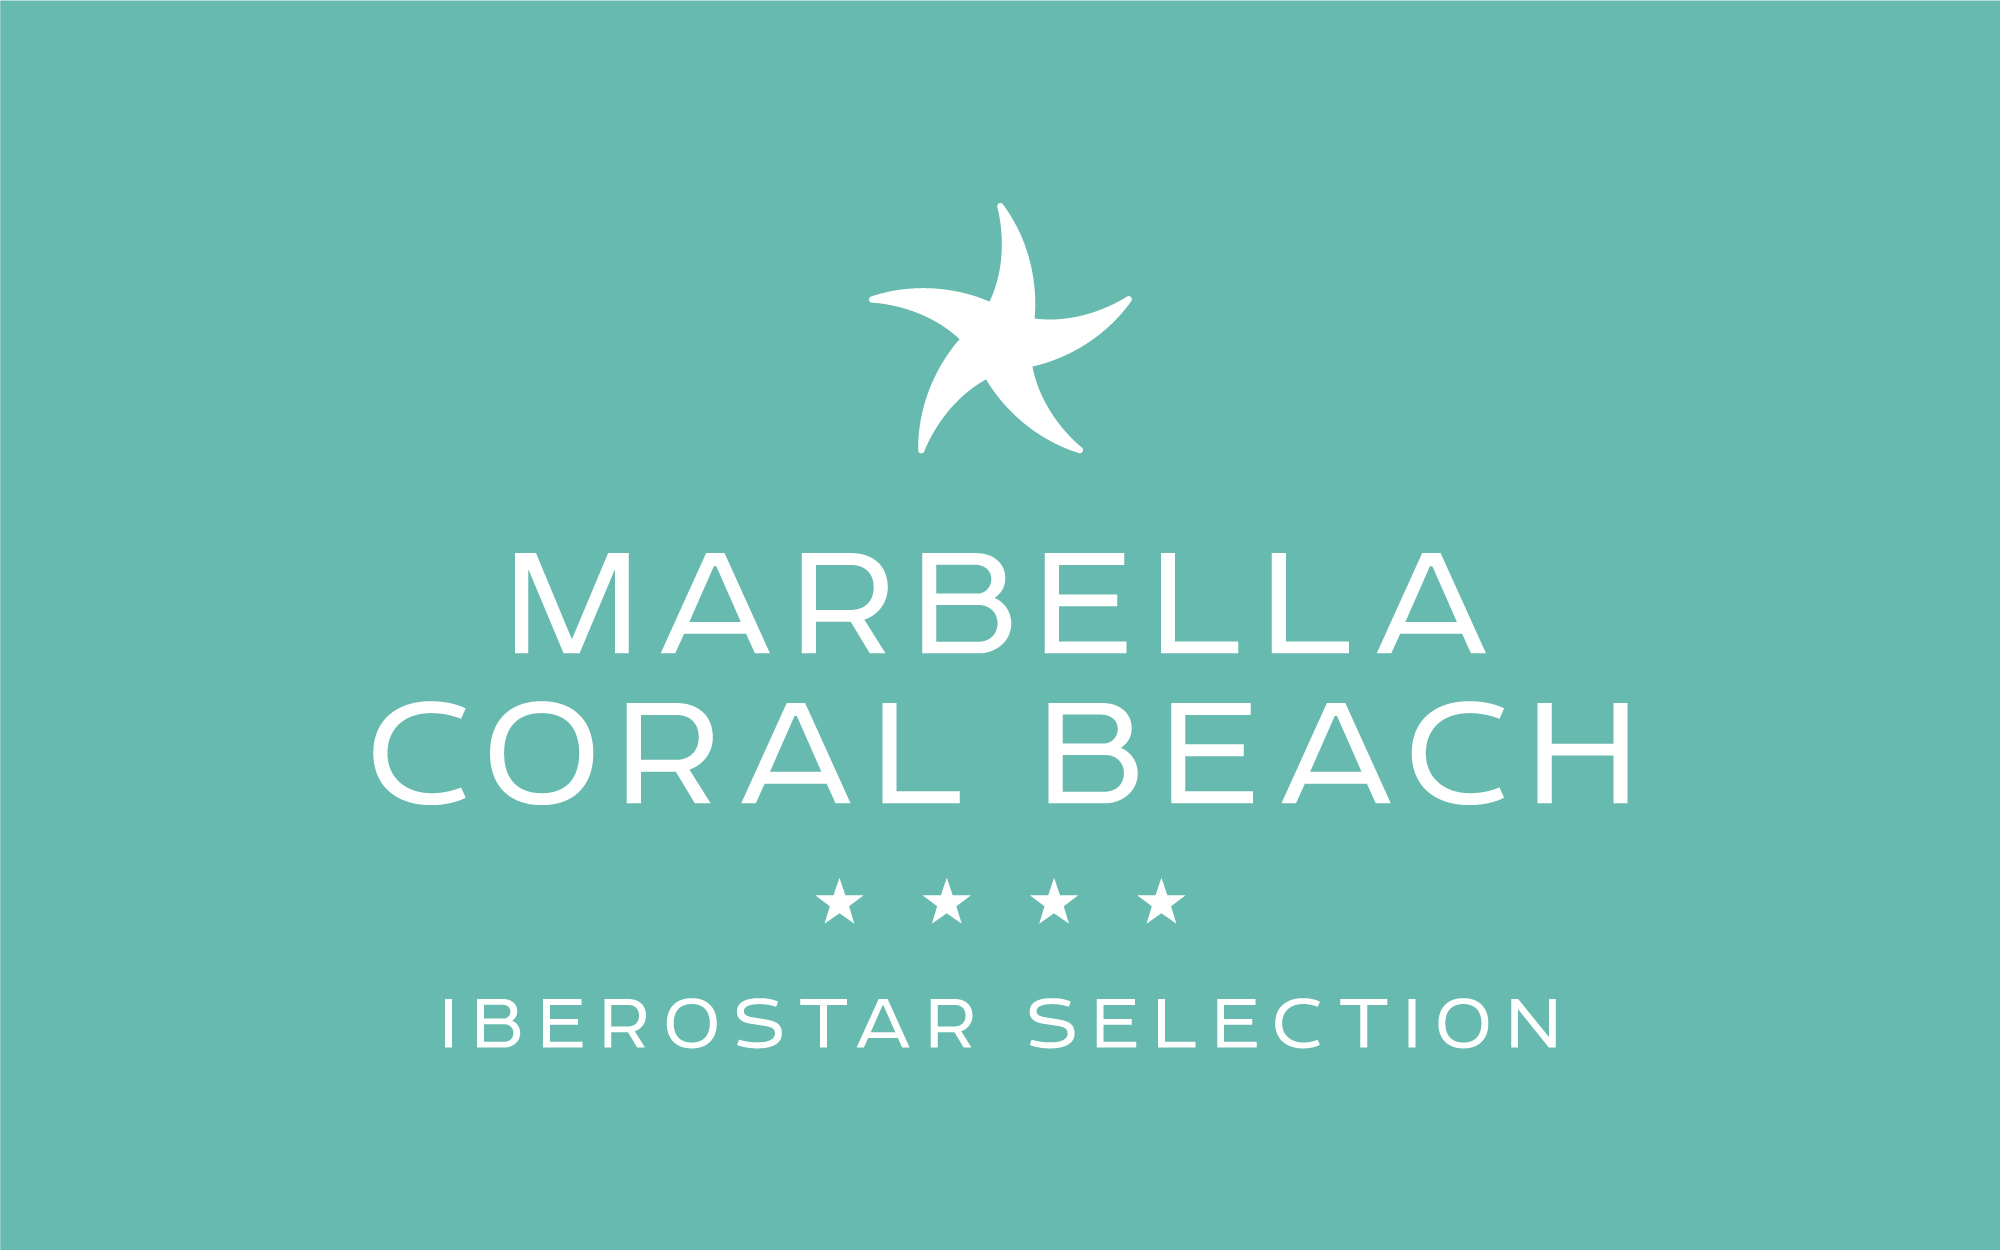 Iberostar Selection Marbella Coral Beach